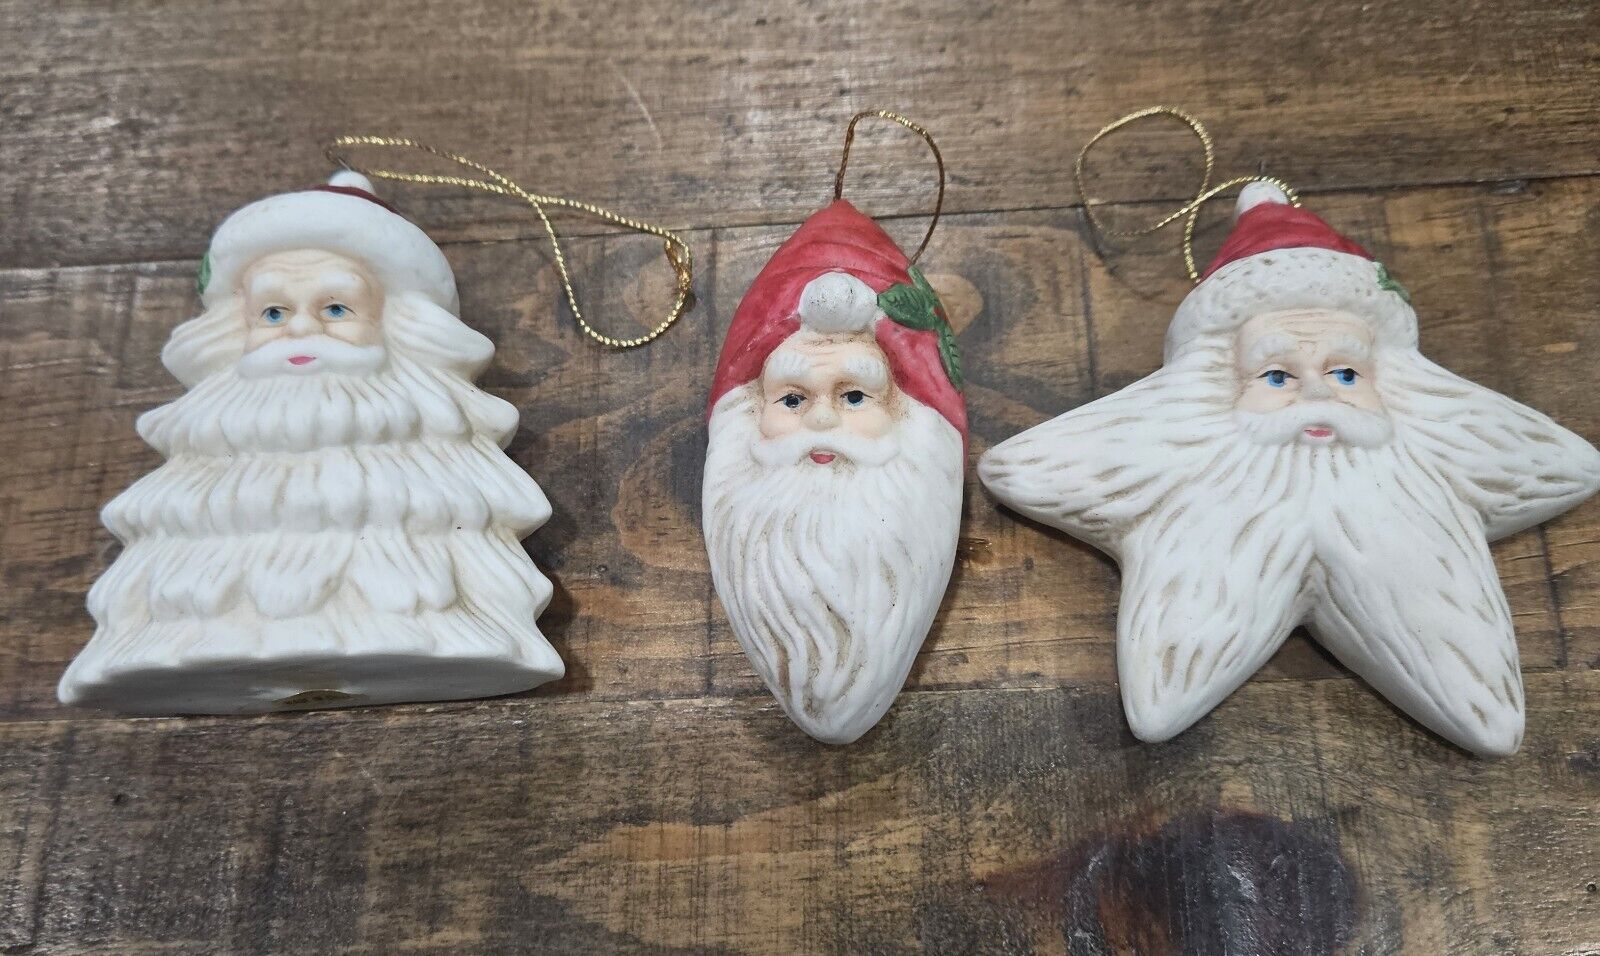  Old World Santa Christmas Ornaments  Ceramic Vintage  Set of 3